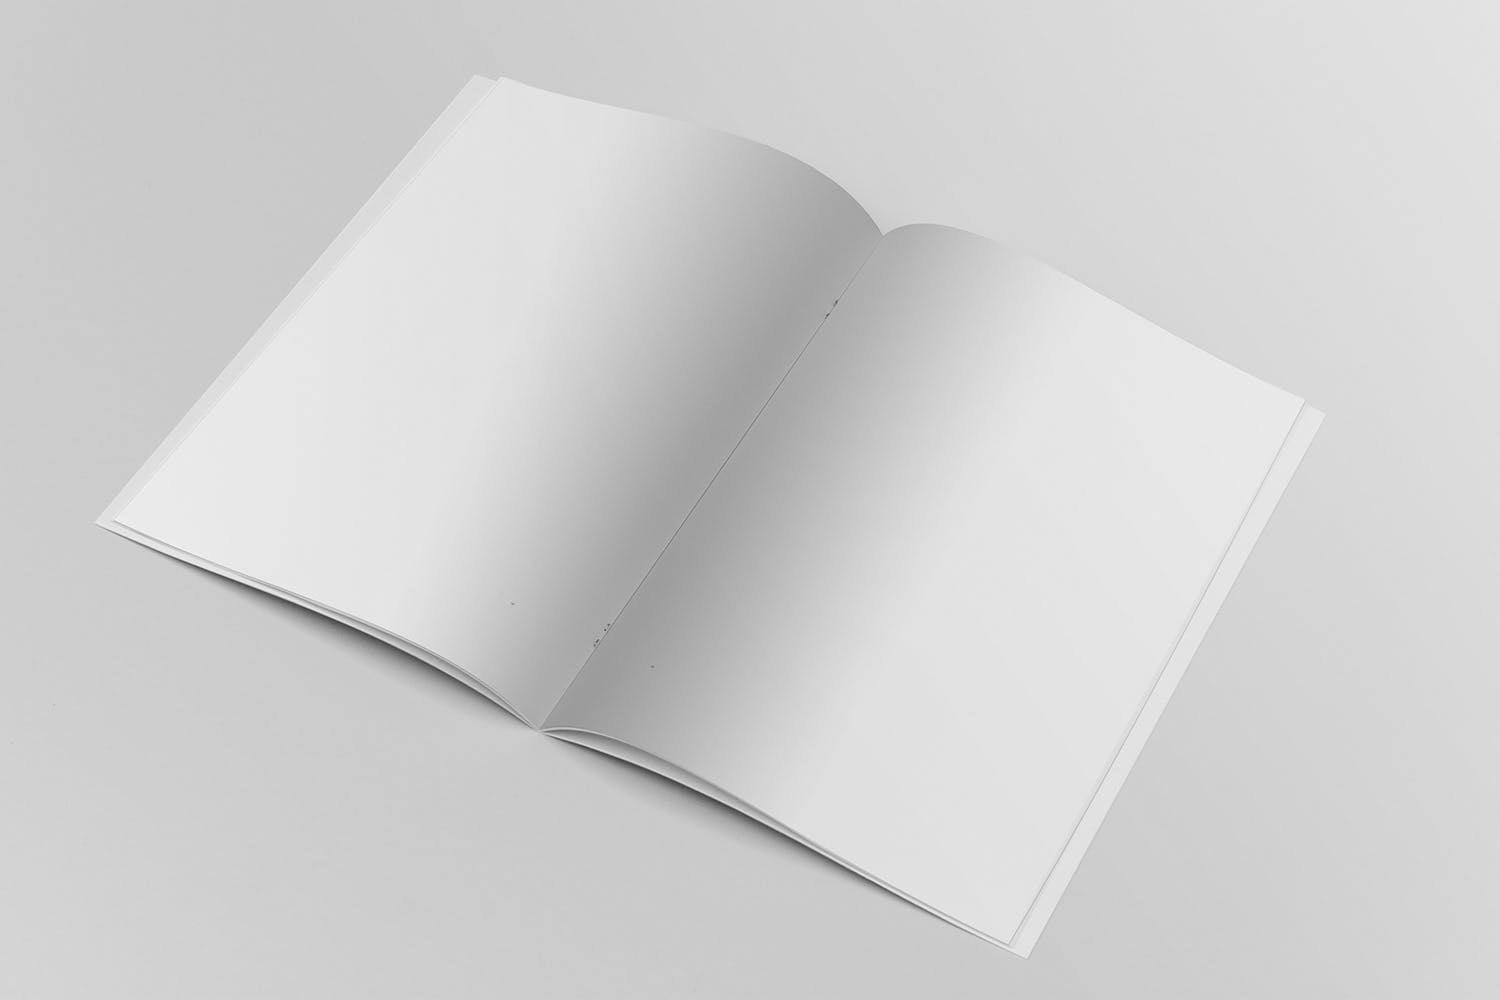 A4宣传小册子/企业画册内页排版设计效果图样机16设计网精选 A4 Brochure Mockup Open Pages插图(1)